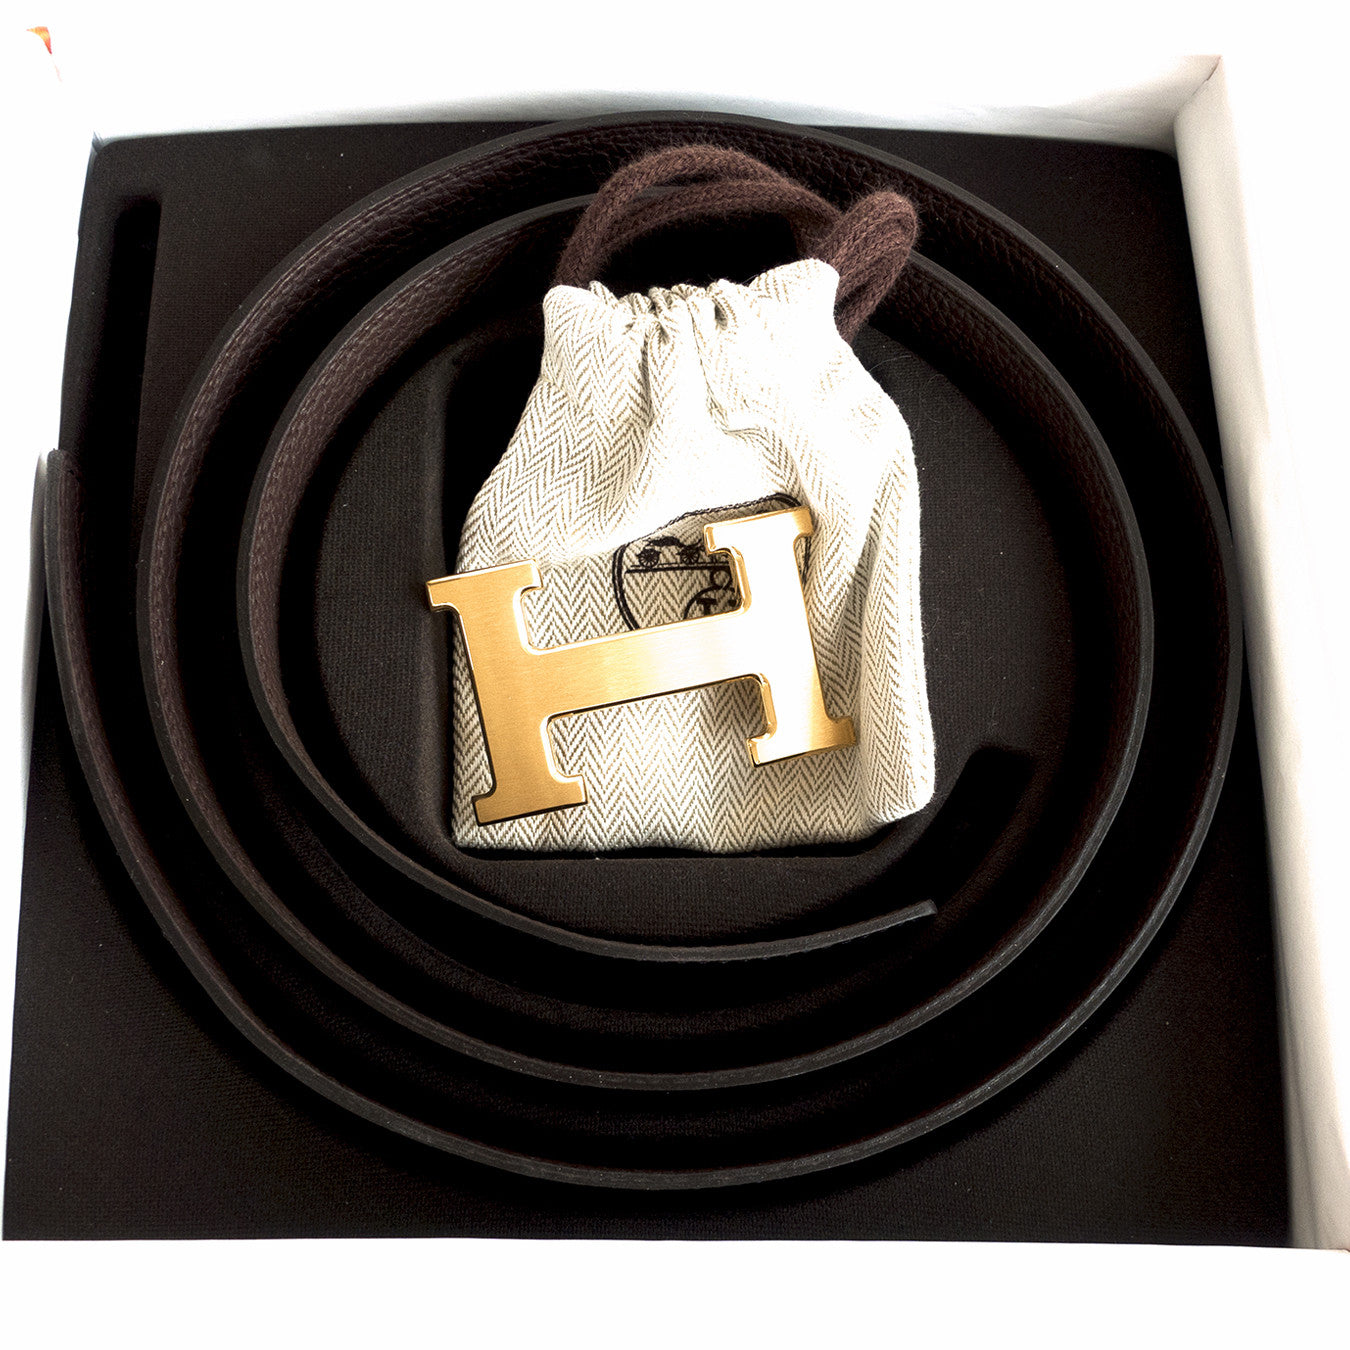 Hermes Constance 42mm Reversible Leather Belt Black/Chocolate